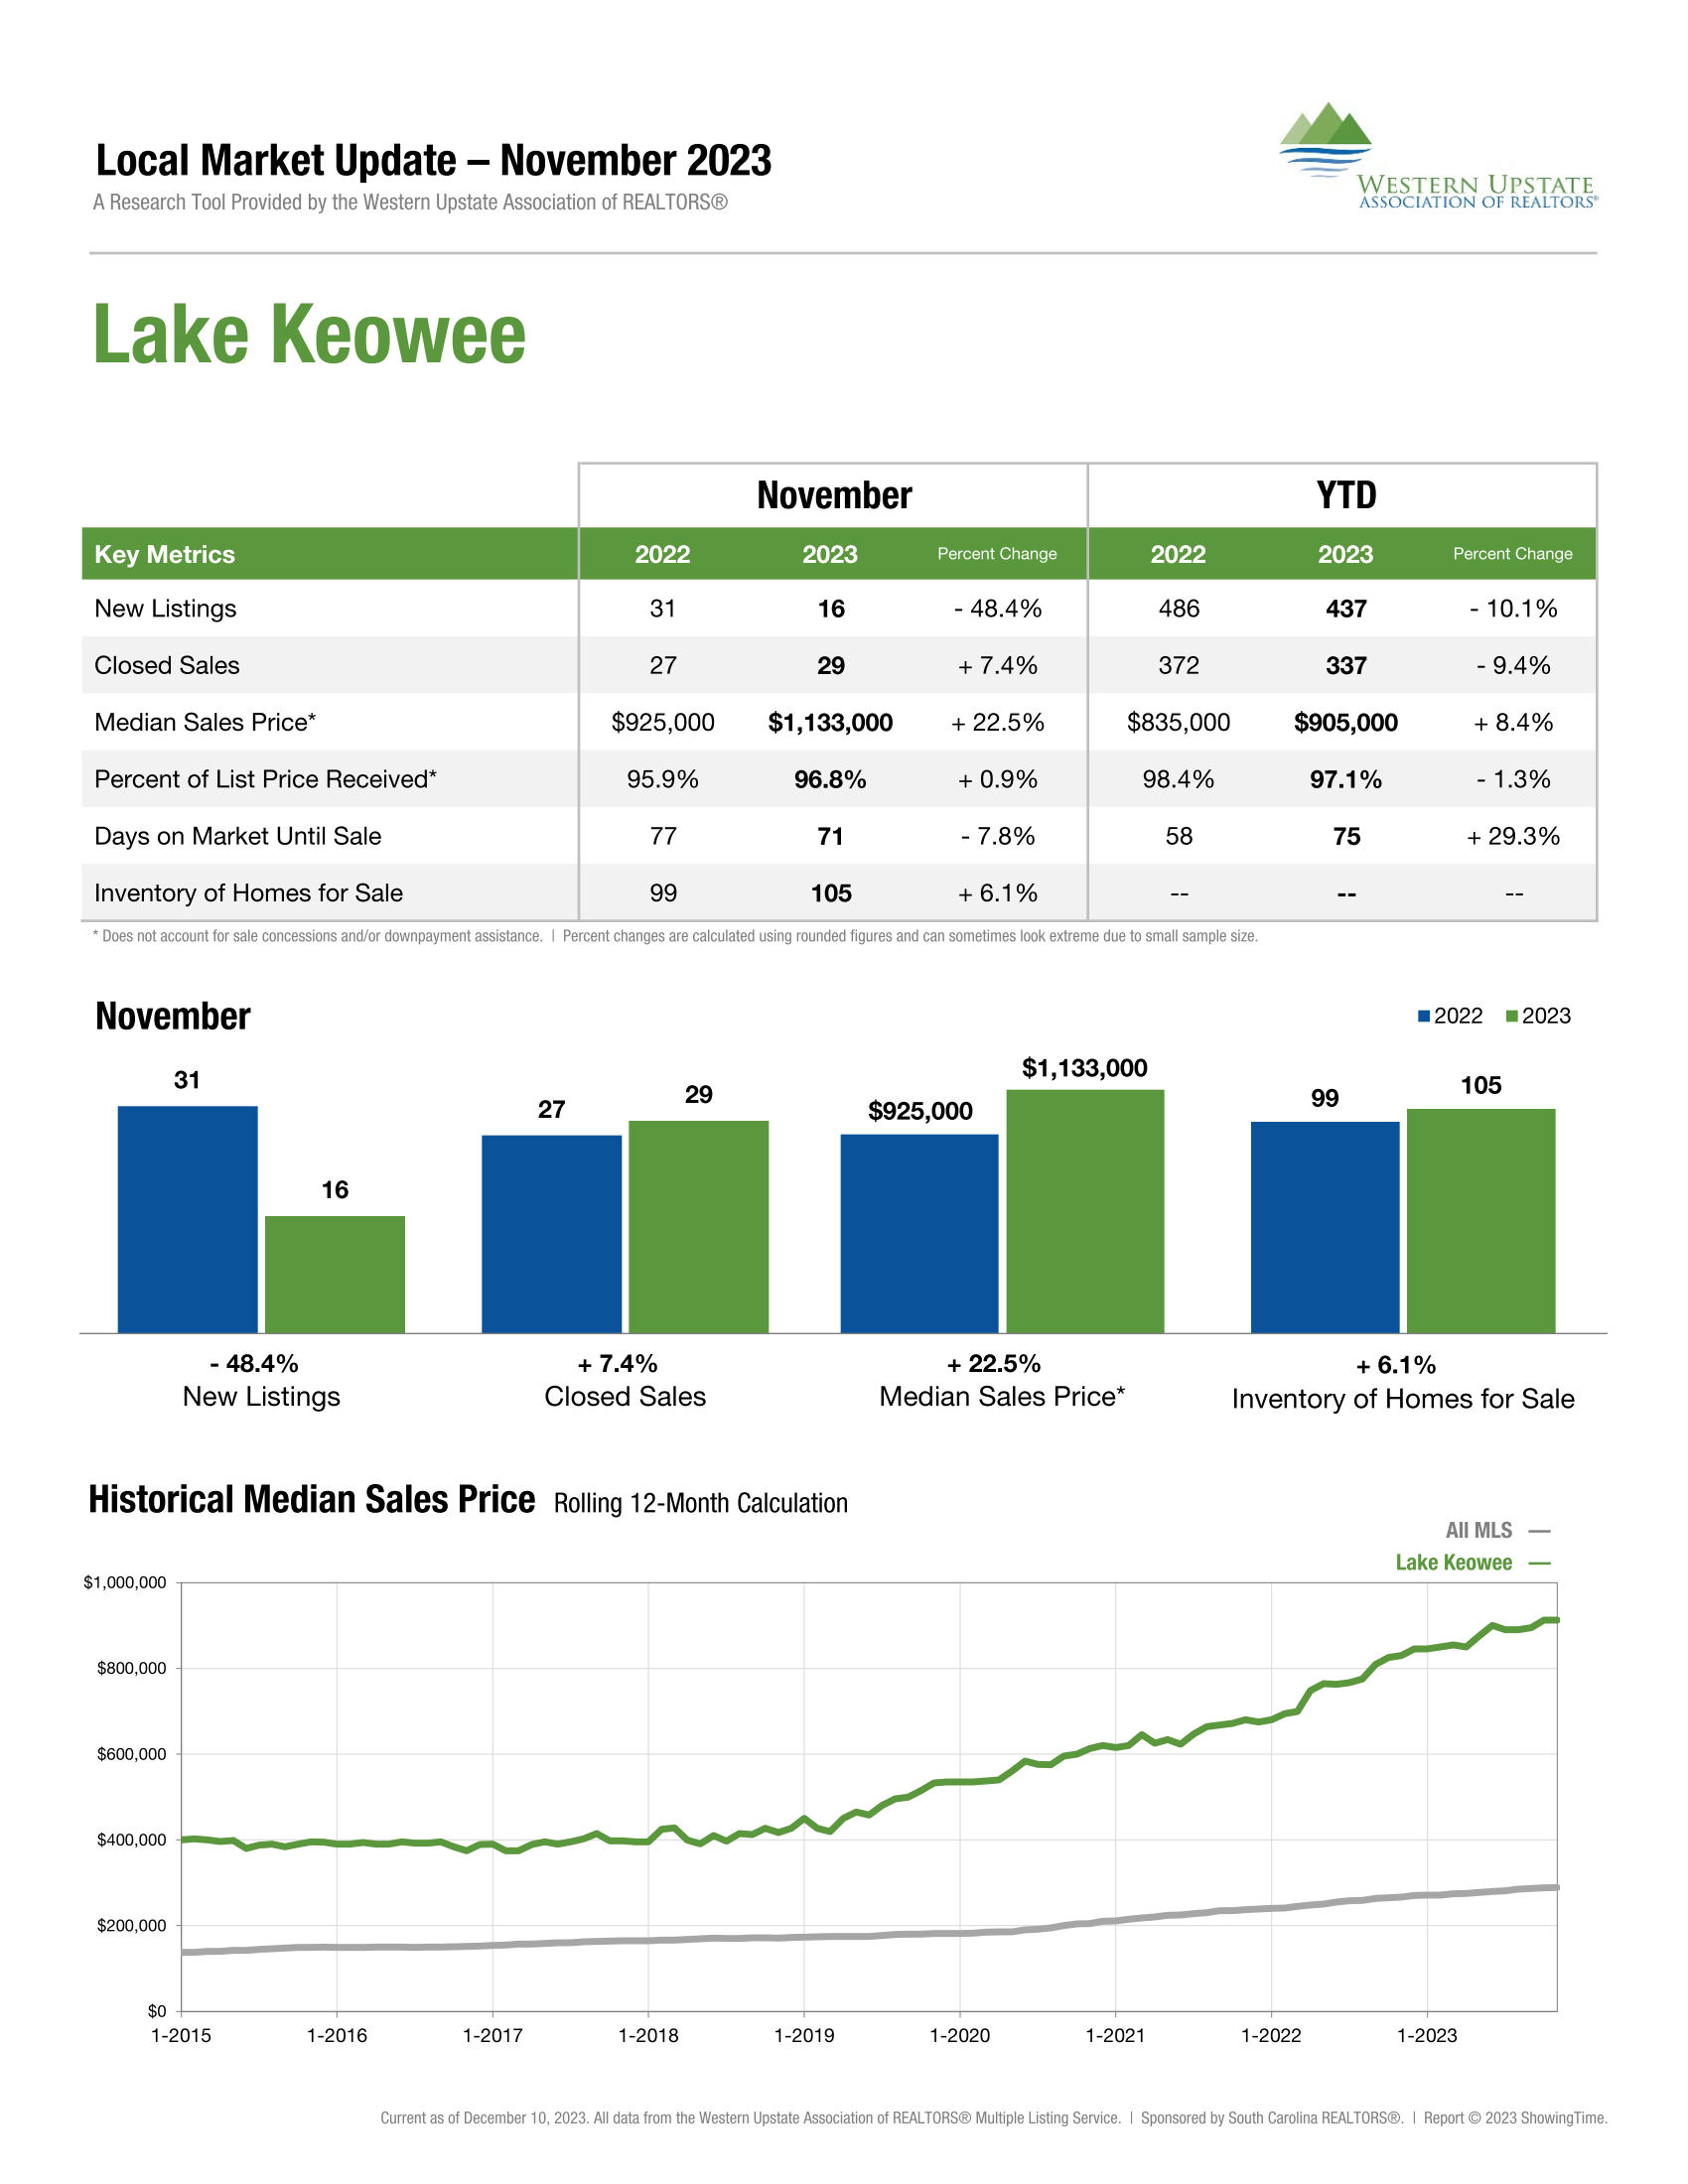 Lake Keowee real estate market trends report